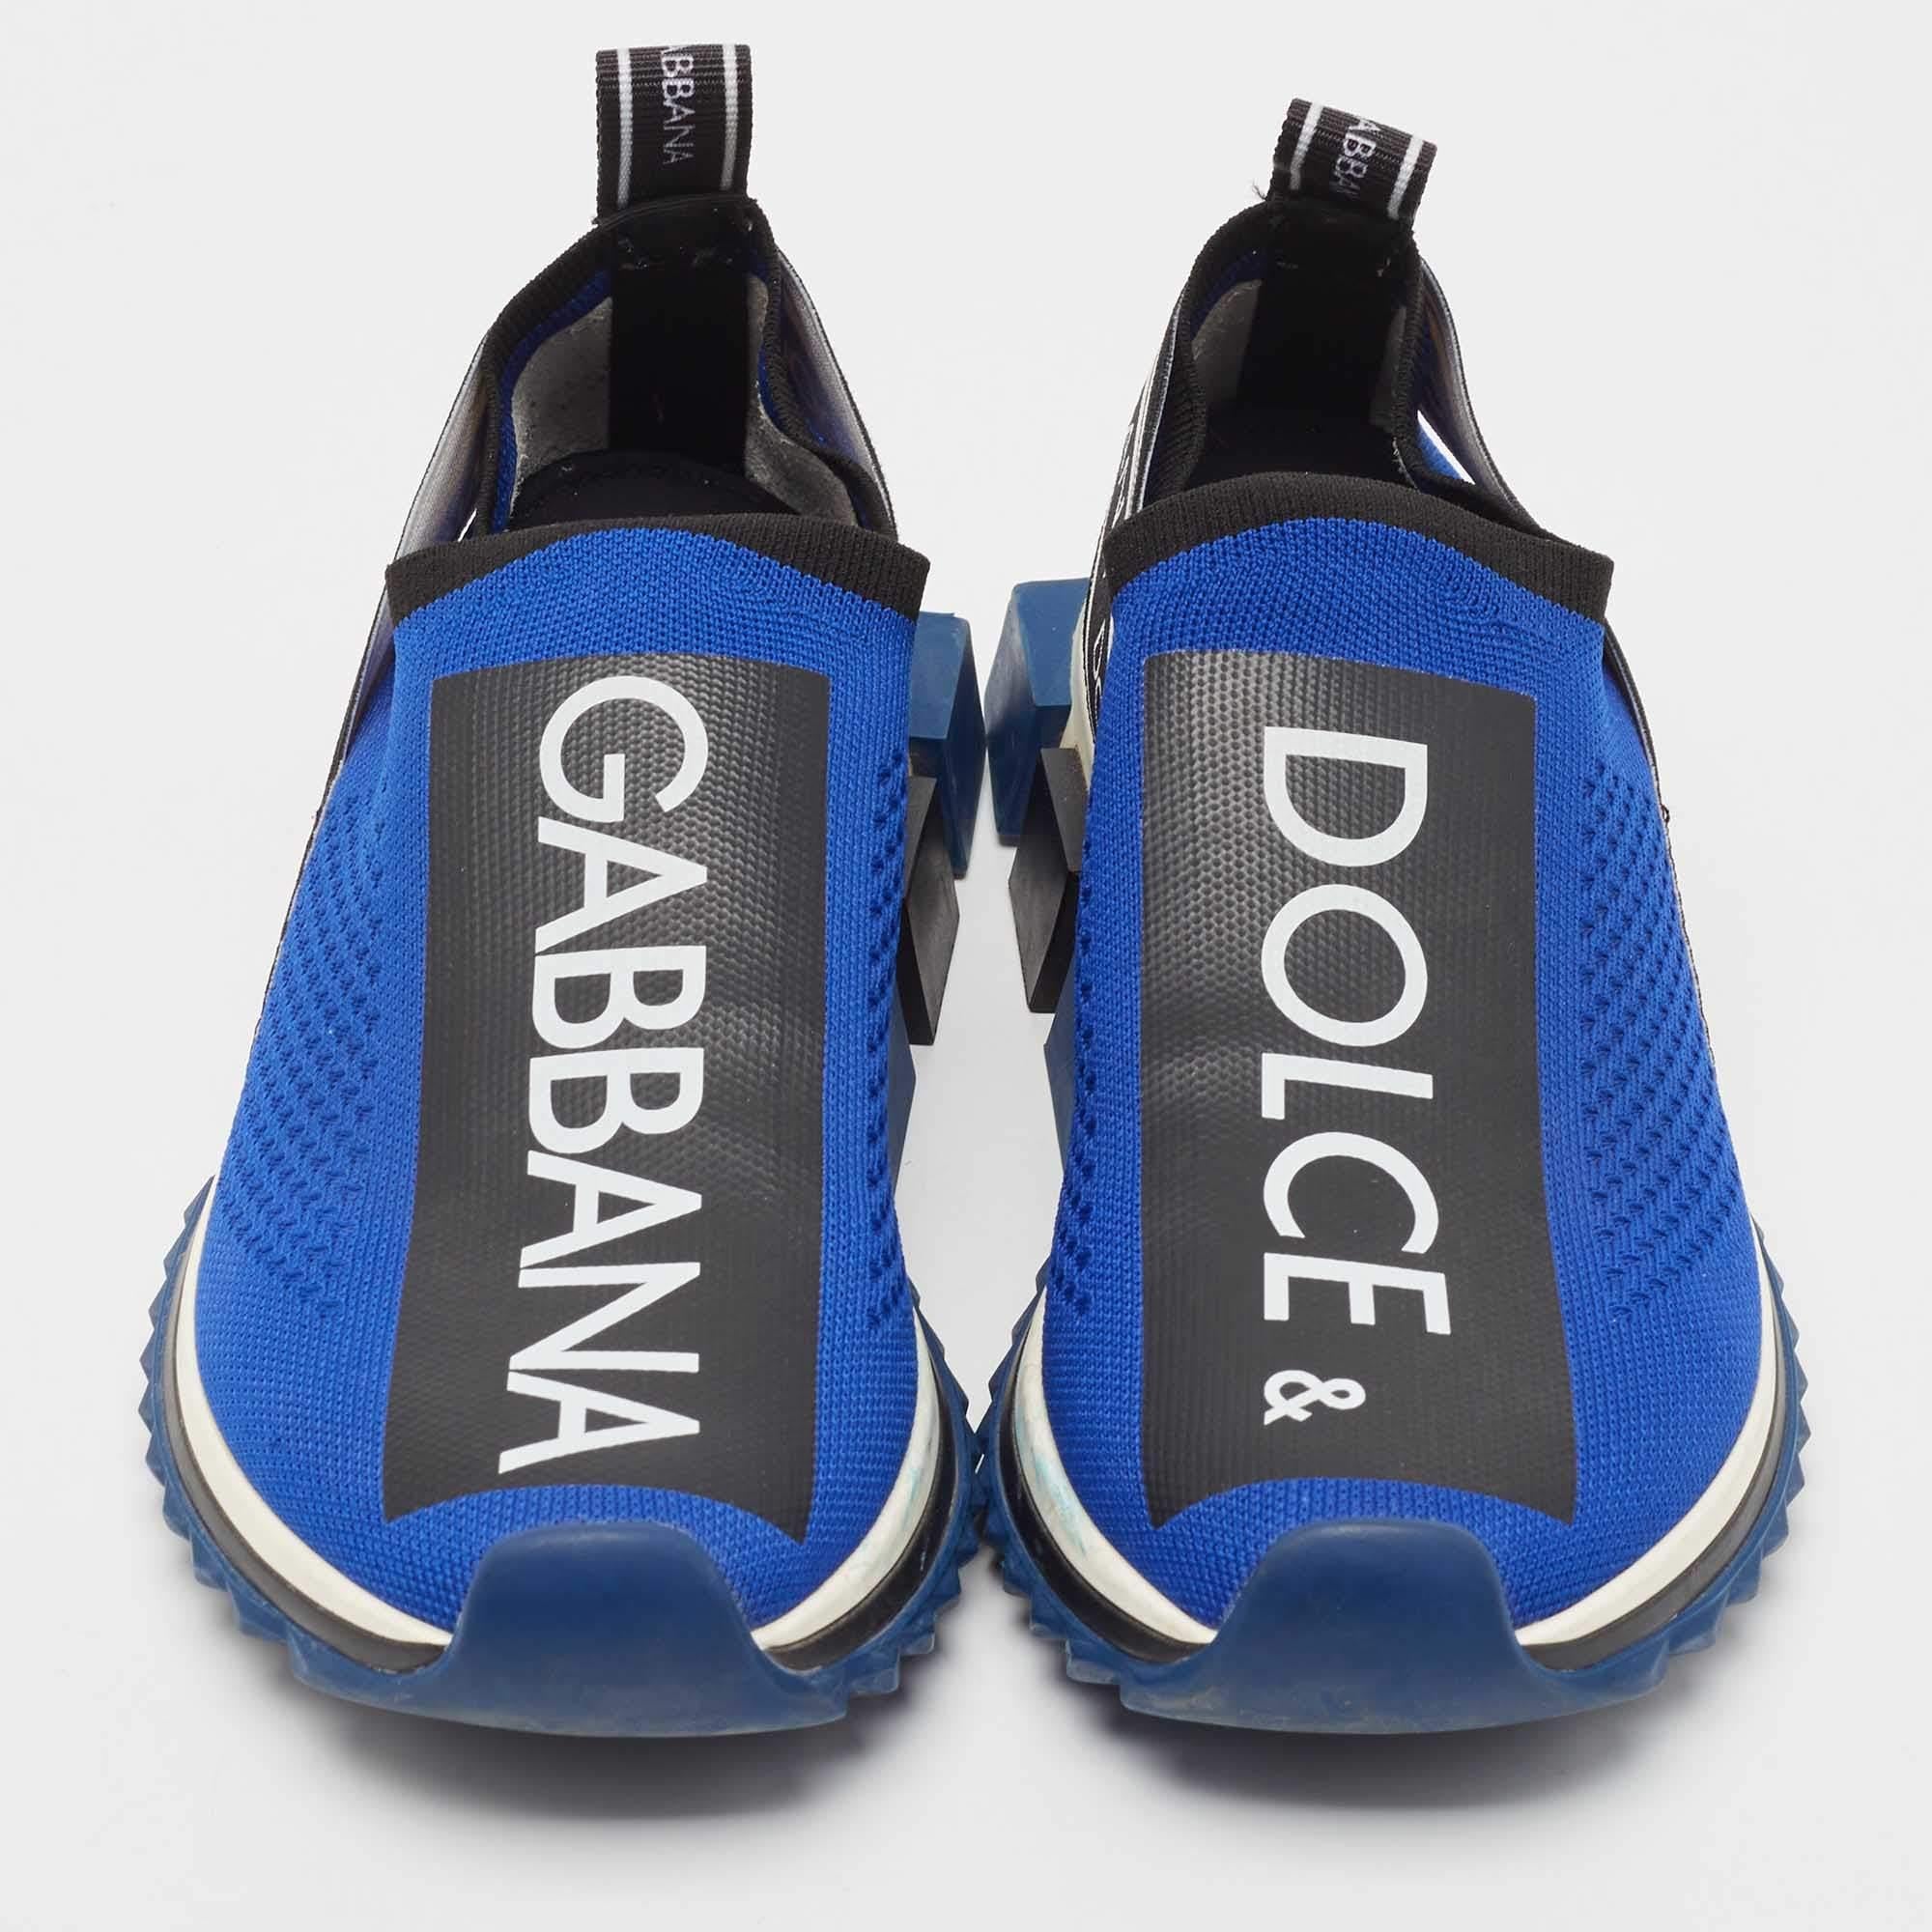 Dolce & Gabbana Blue/Black Knit Fabric Sorrento Sneakers Size 39 1